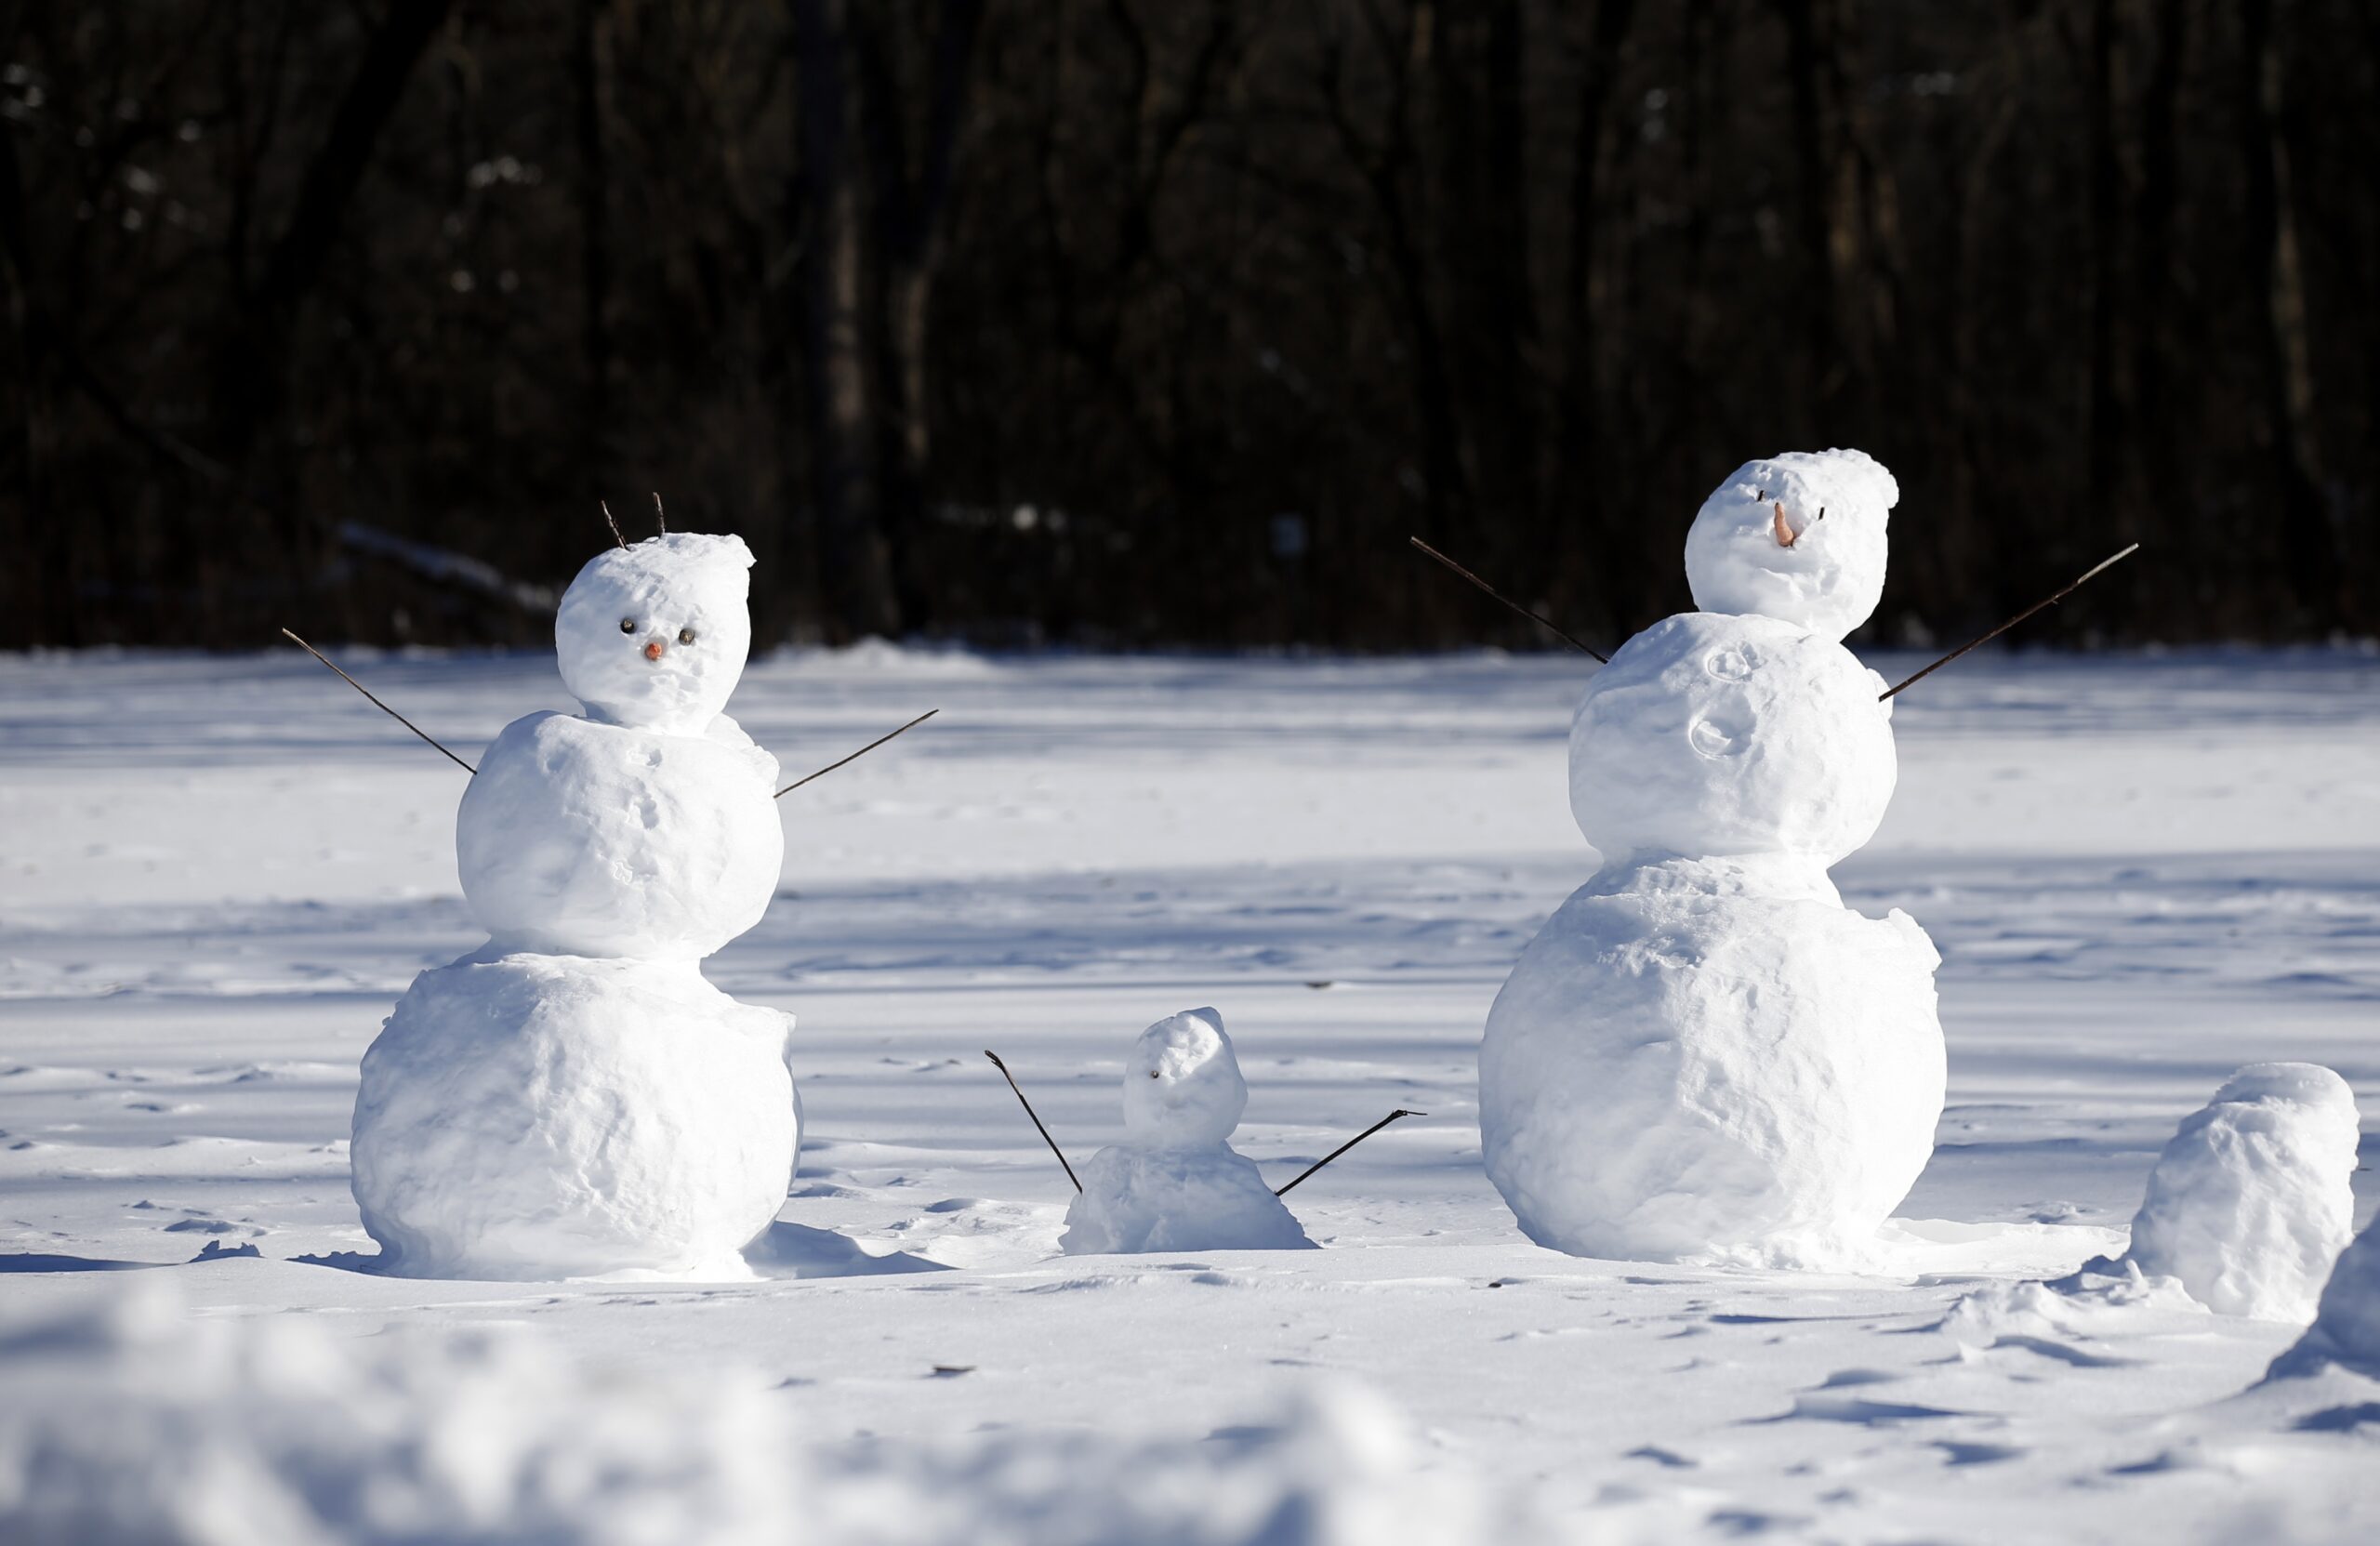 Snowmen family